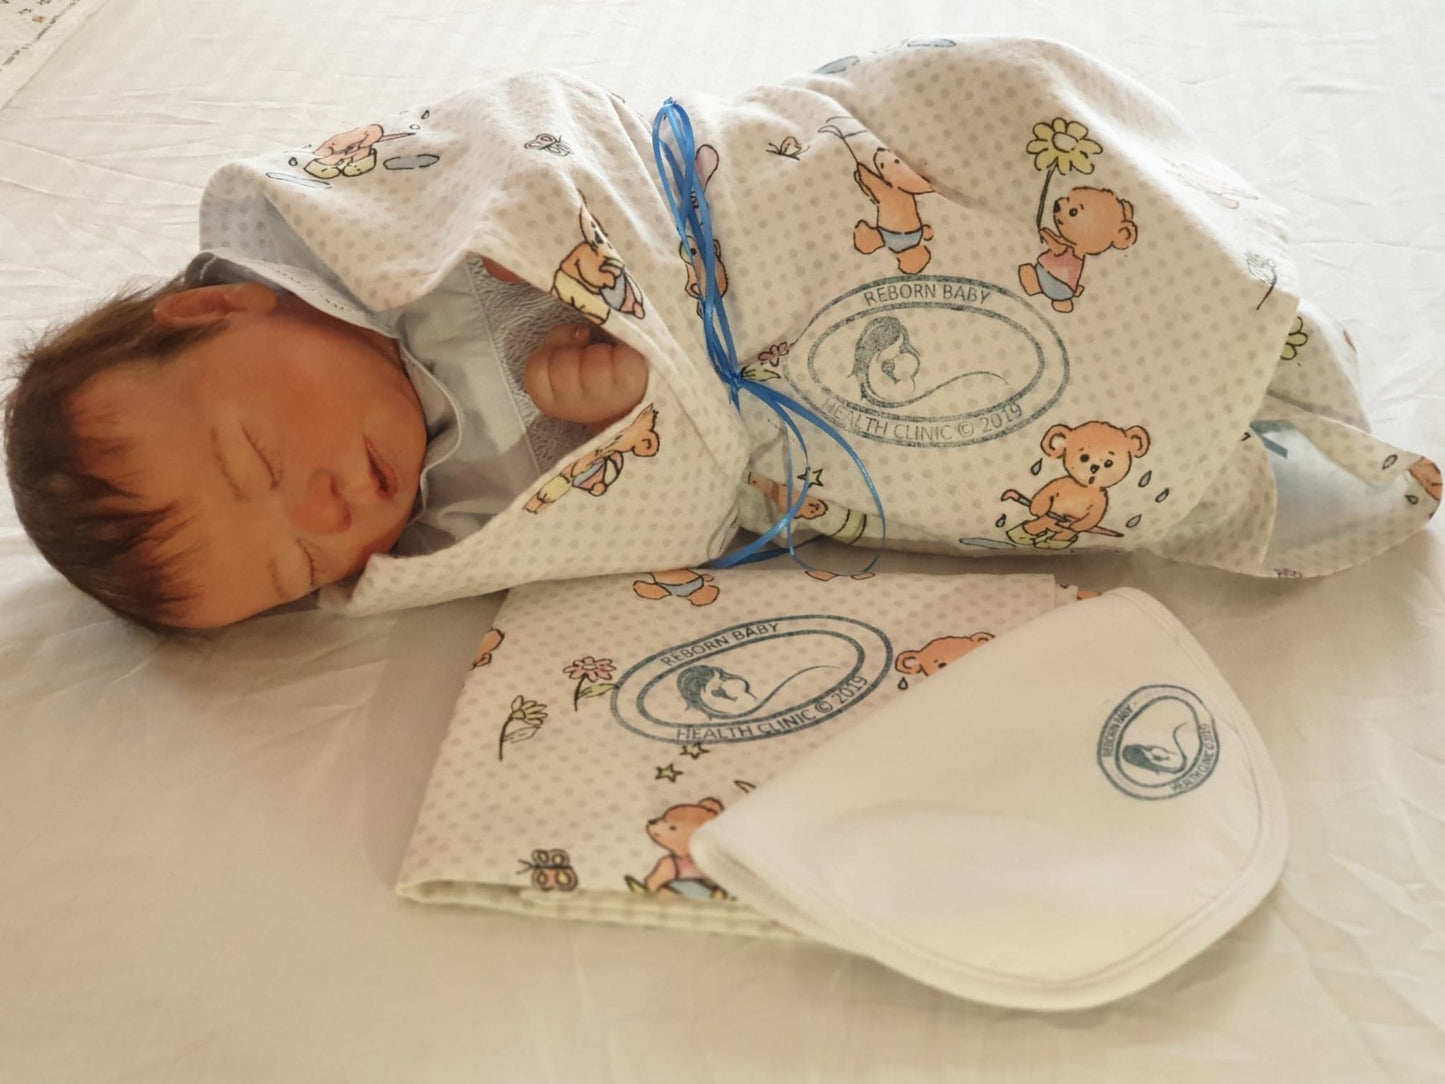 Newborn Hospital Blanket ~ Reborn Health Clinic 2019